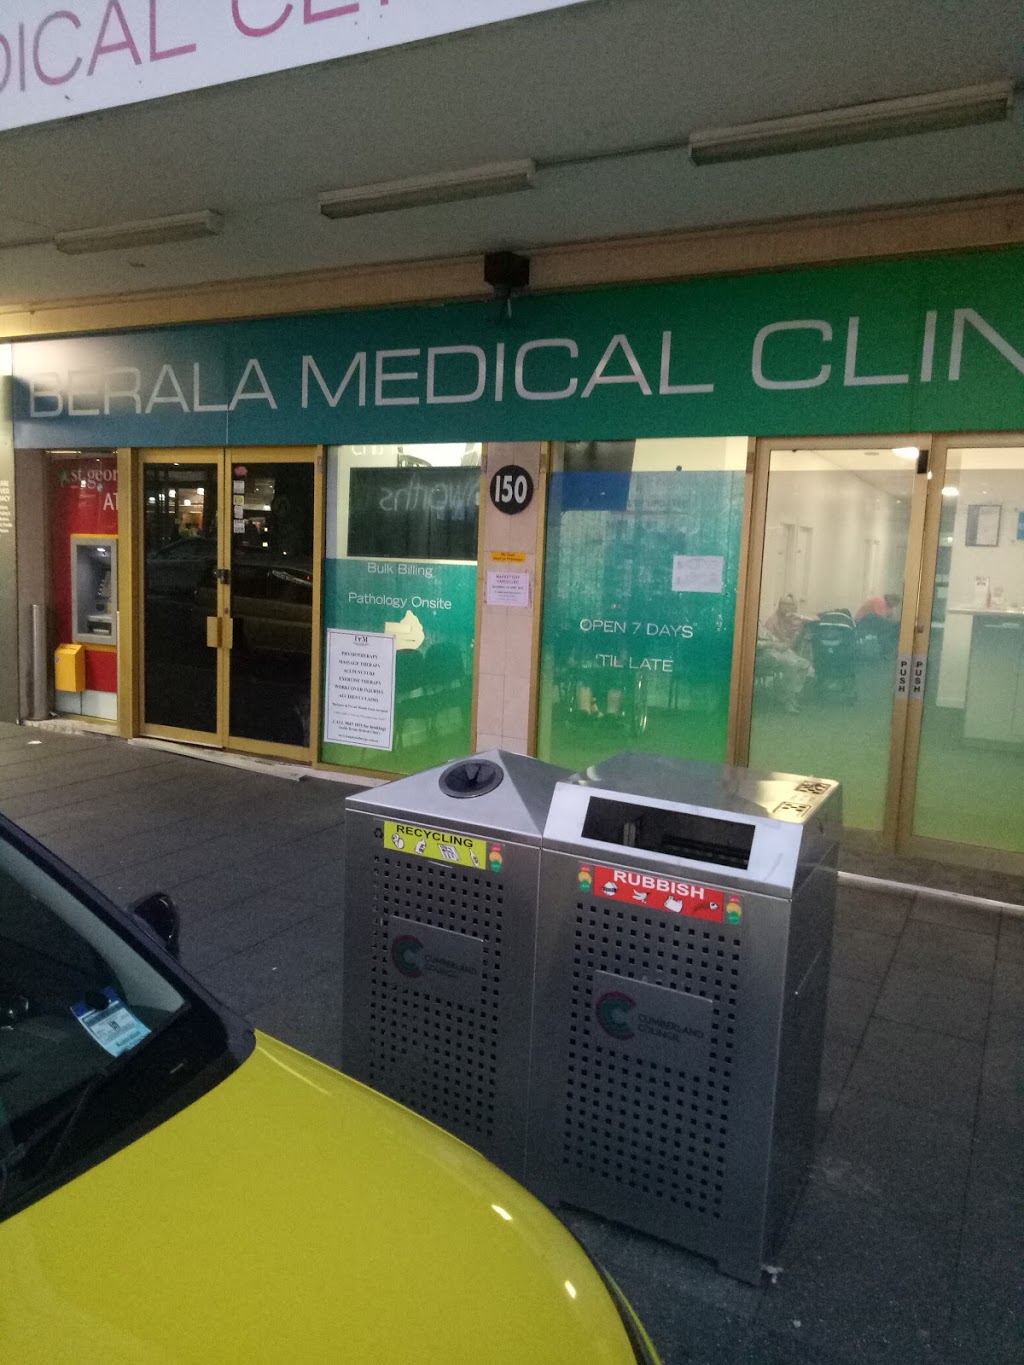 Berala Medical Clinic | health | 2&3/150 Woodburn Rd, Berala NSW 2141, Australia | 0296431819 OR +61 2 9643 1819